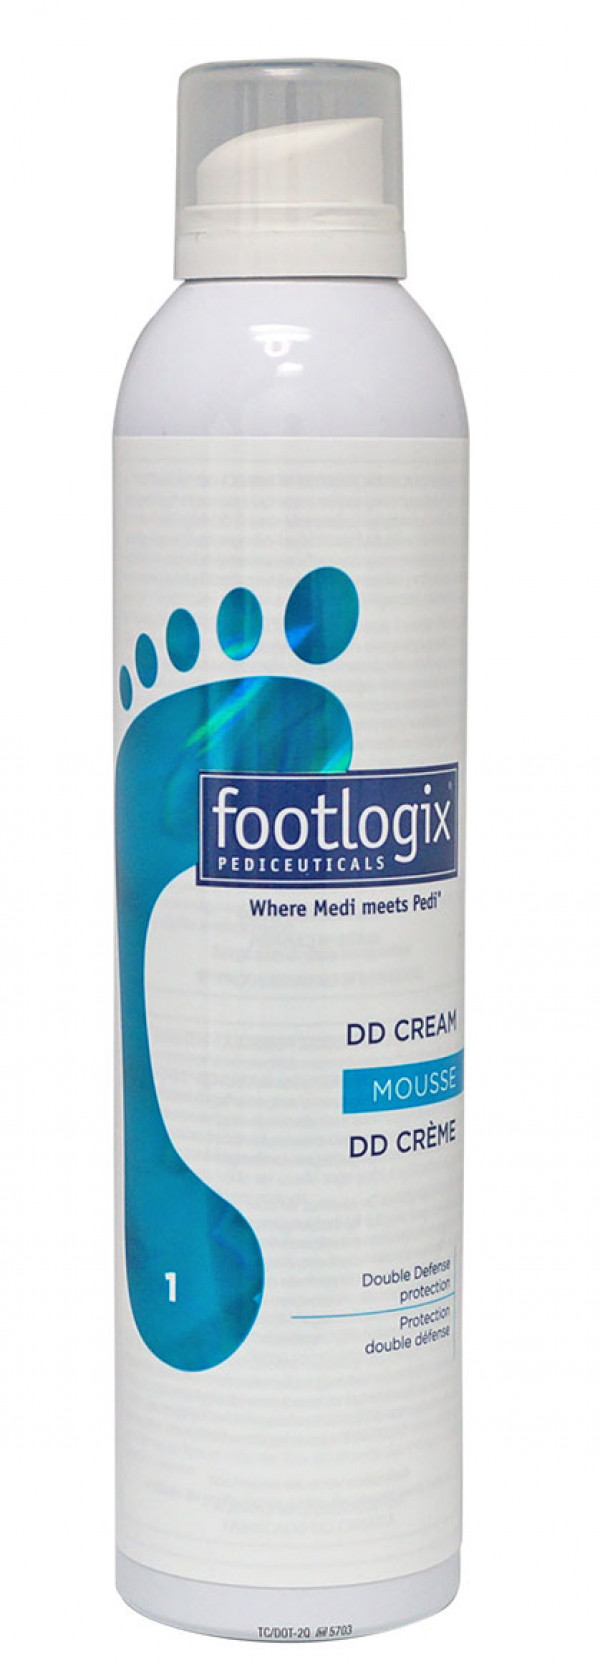 Footlogix 1 DD Cream Mousse Formula 300 ml